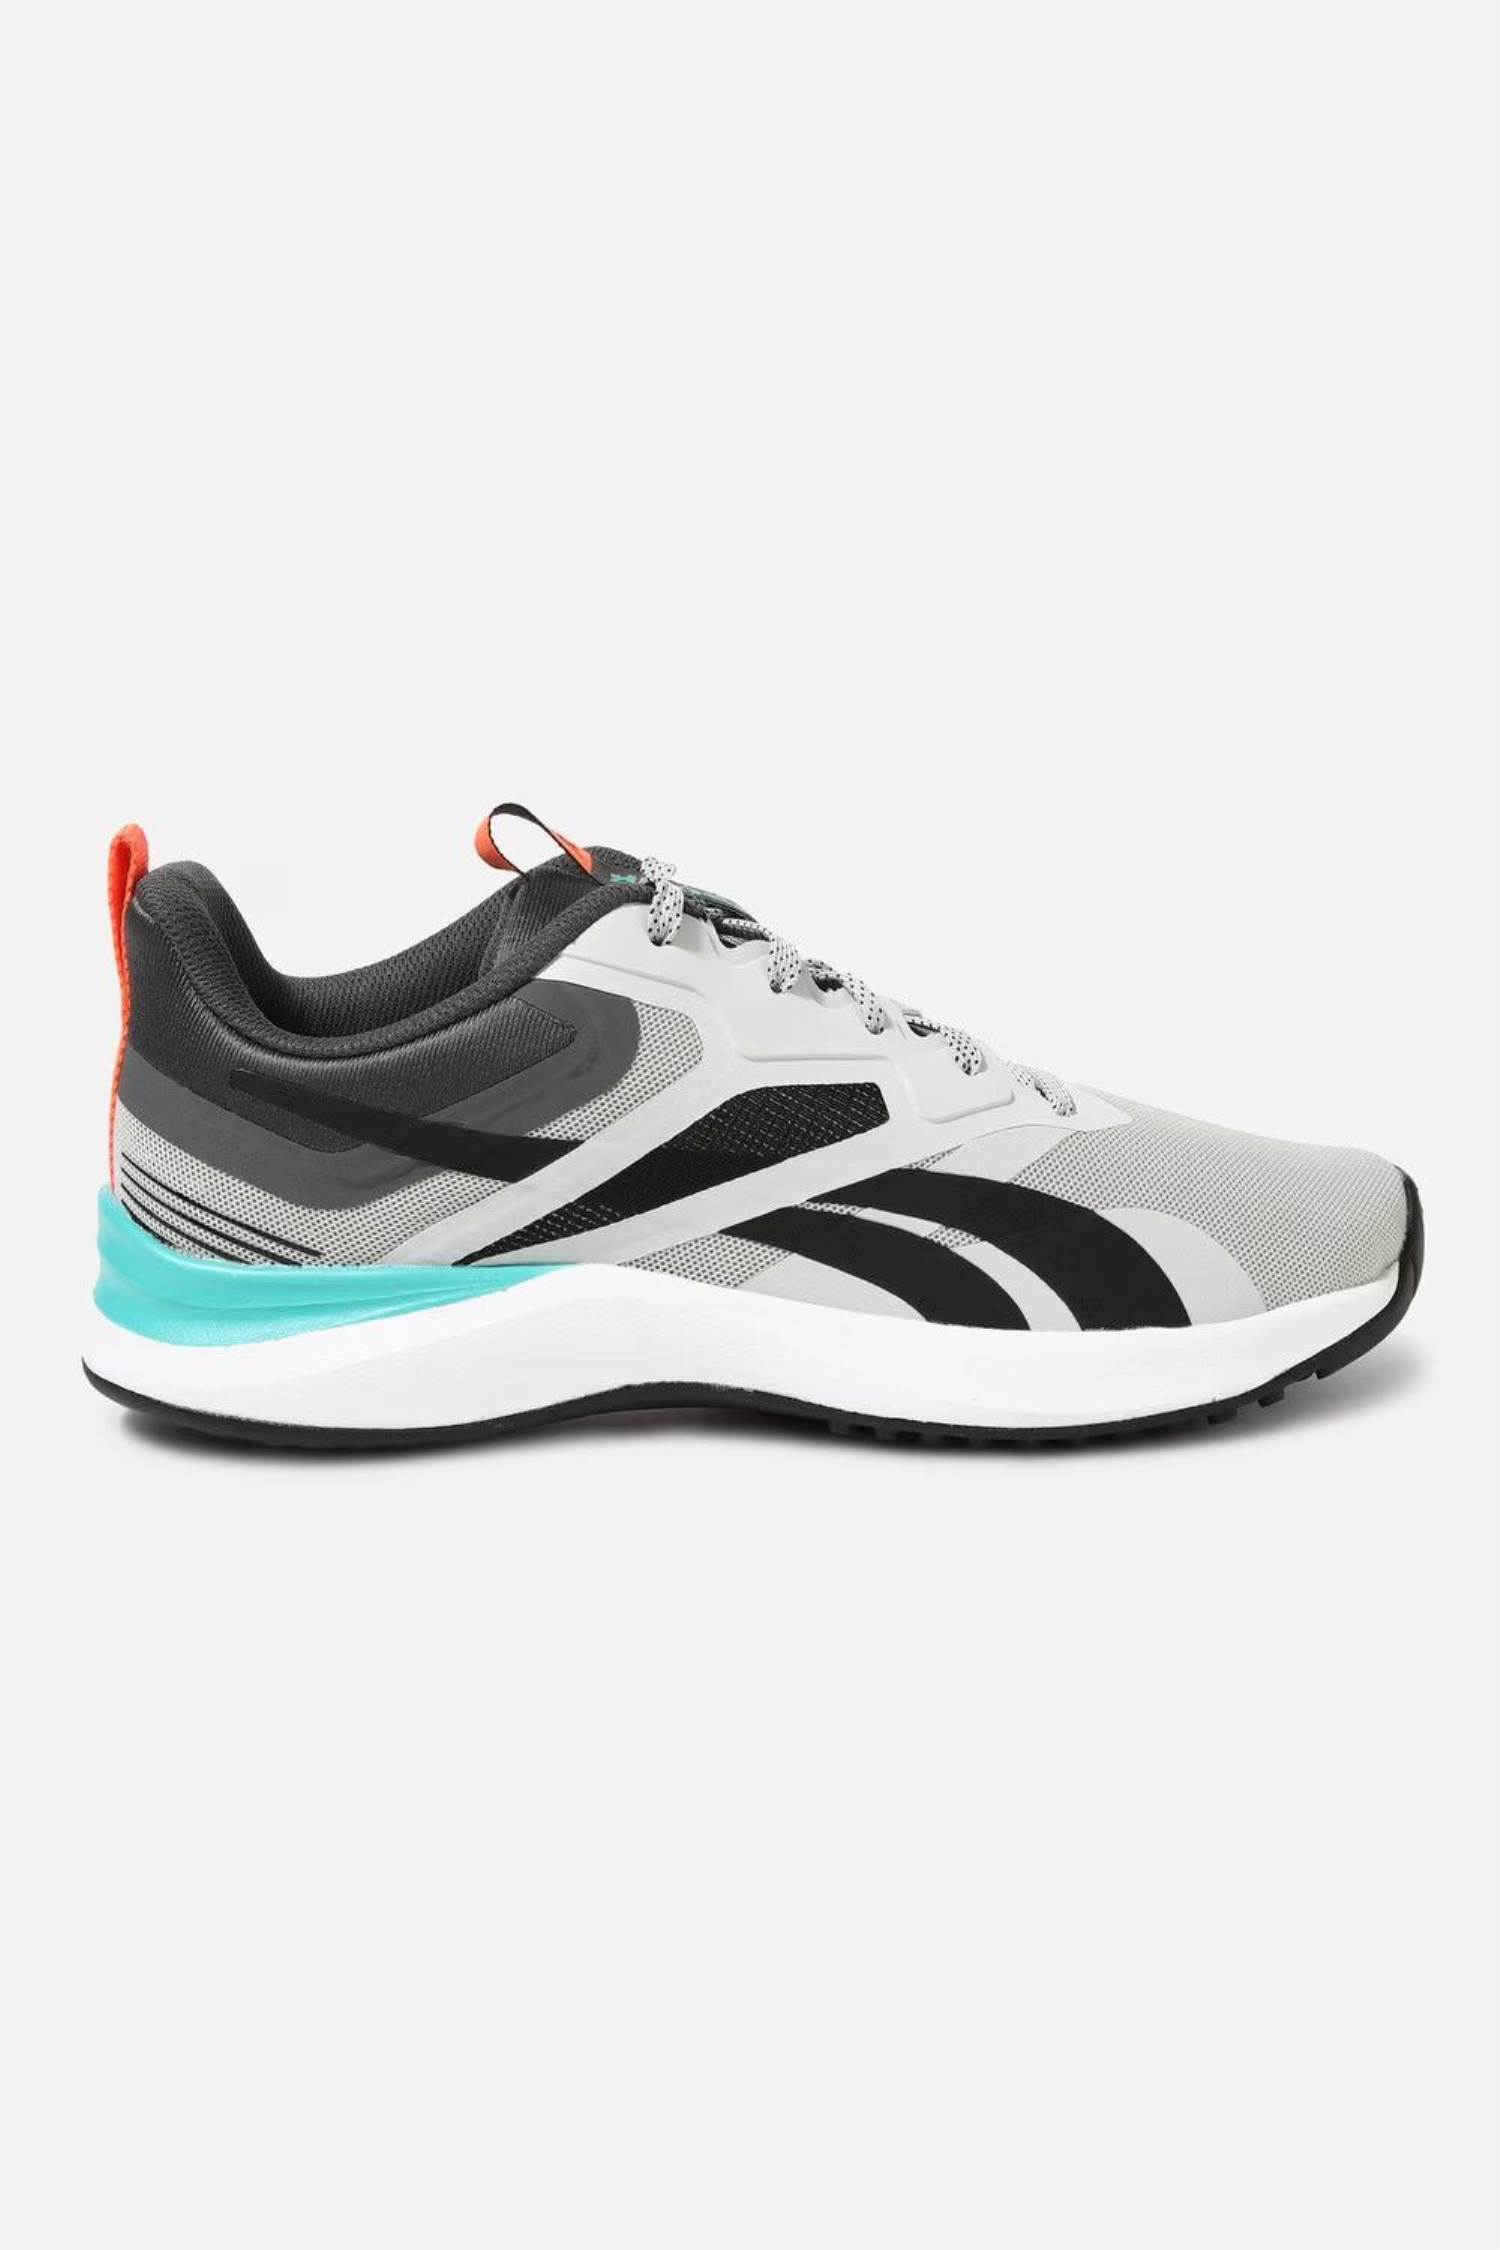 Reebok Brand Mens Original Trek Run M Running Laced Sports Shoes GC0086 ...